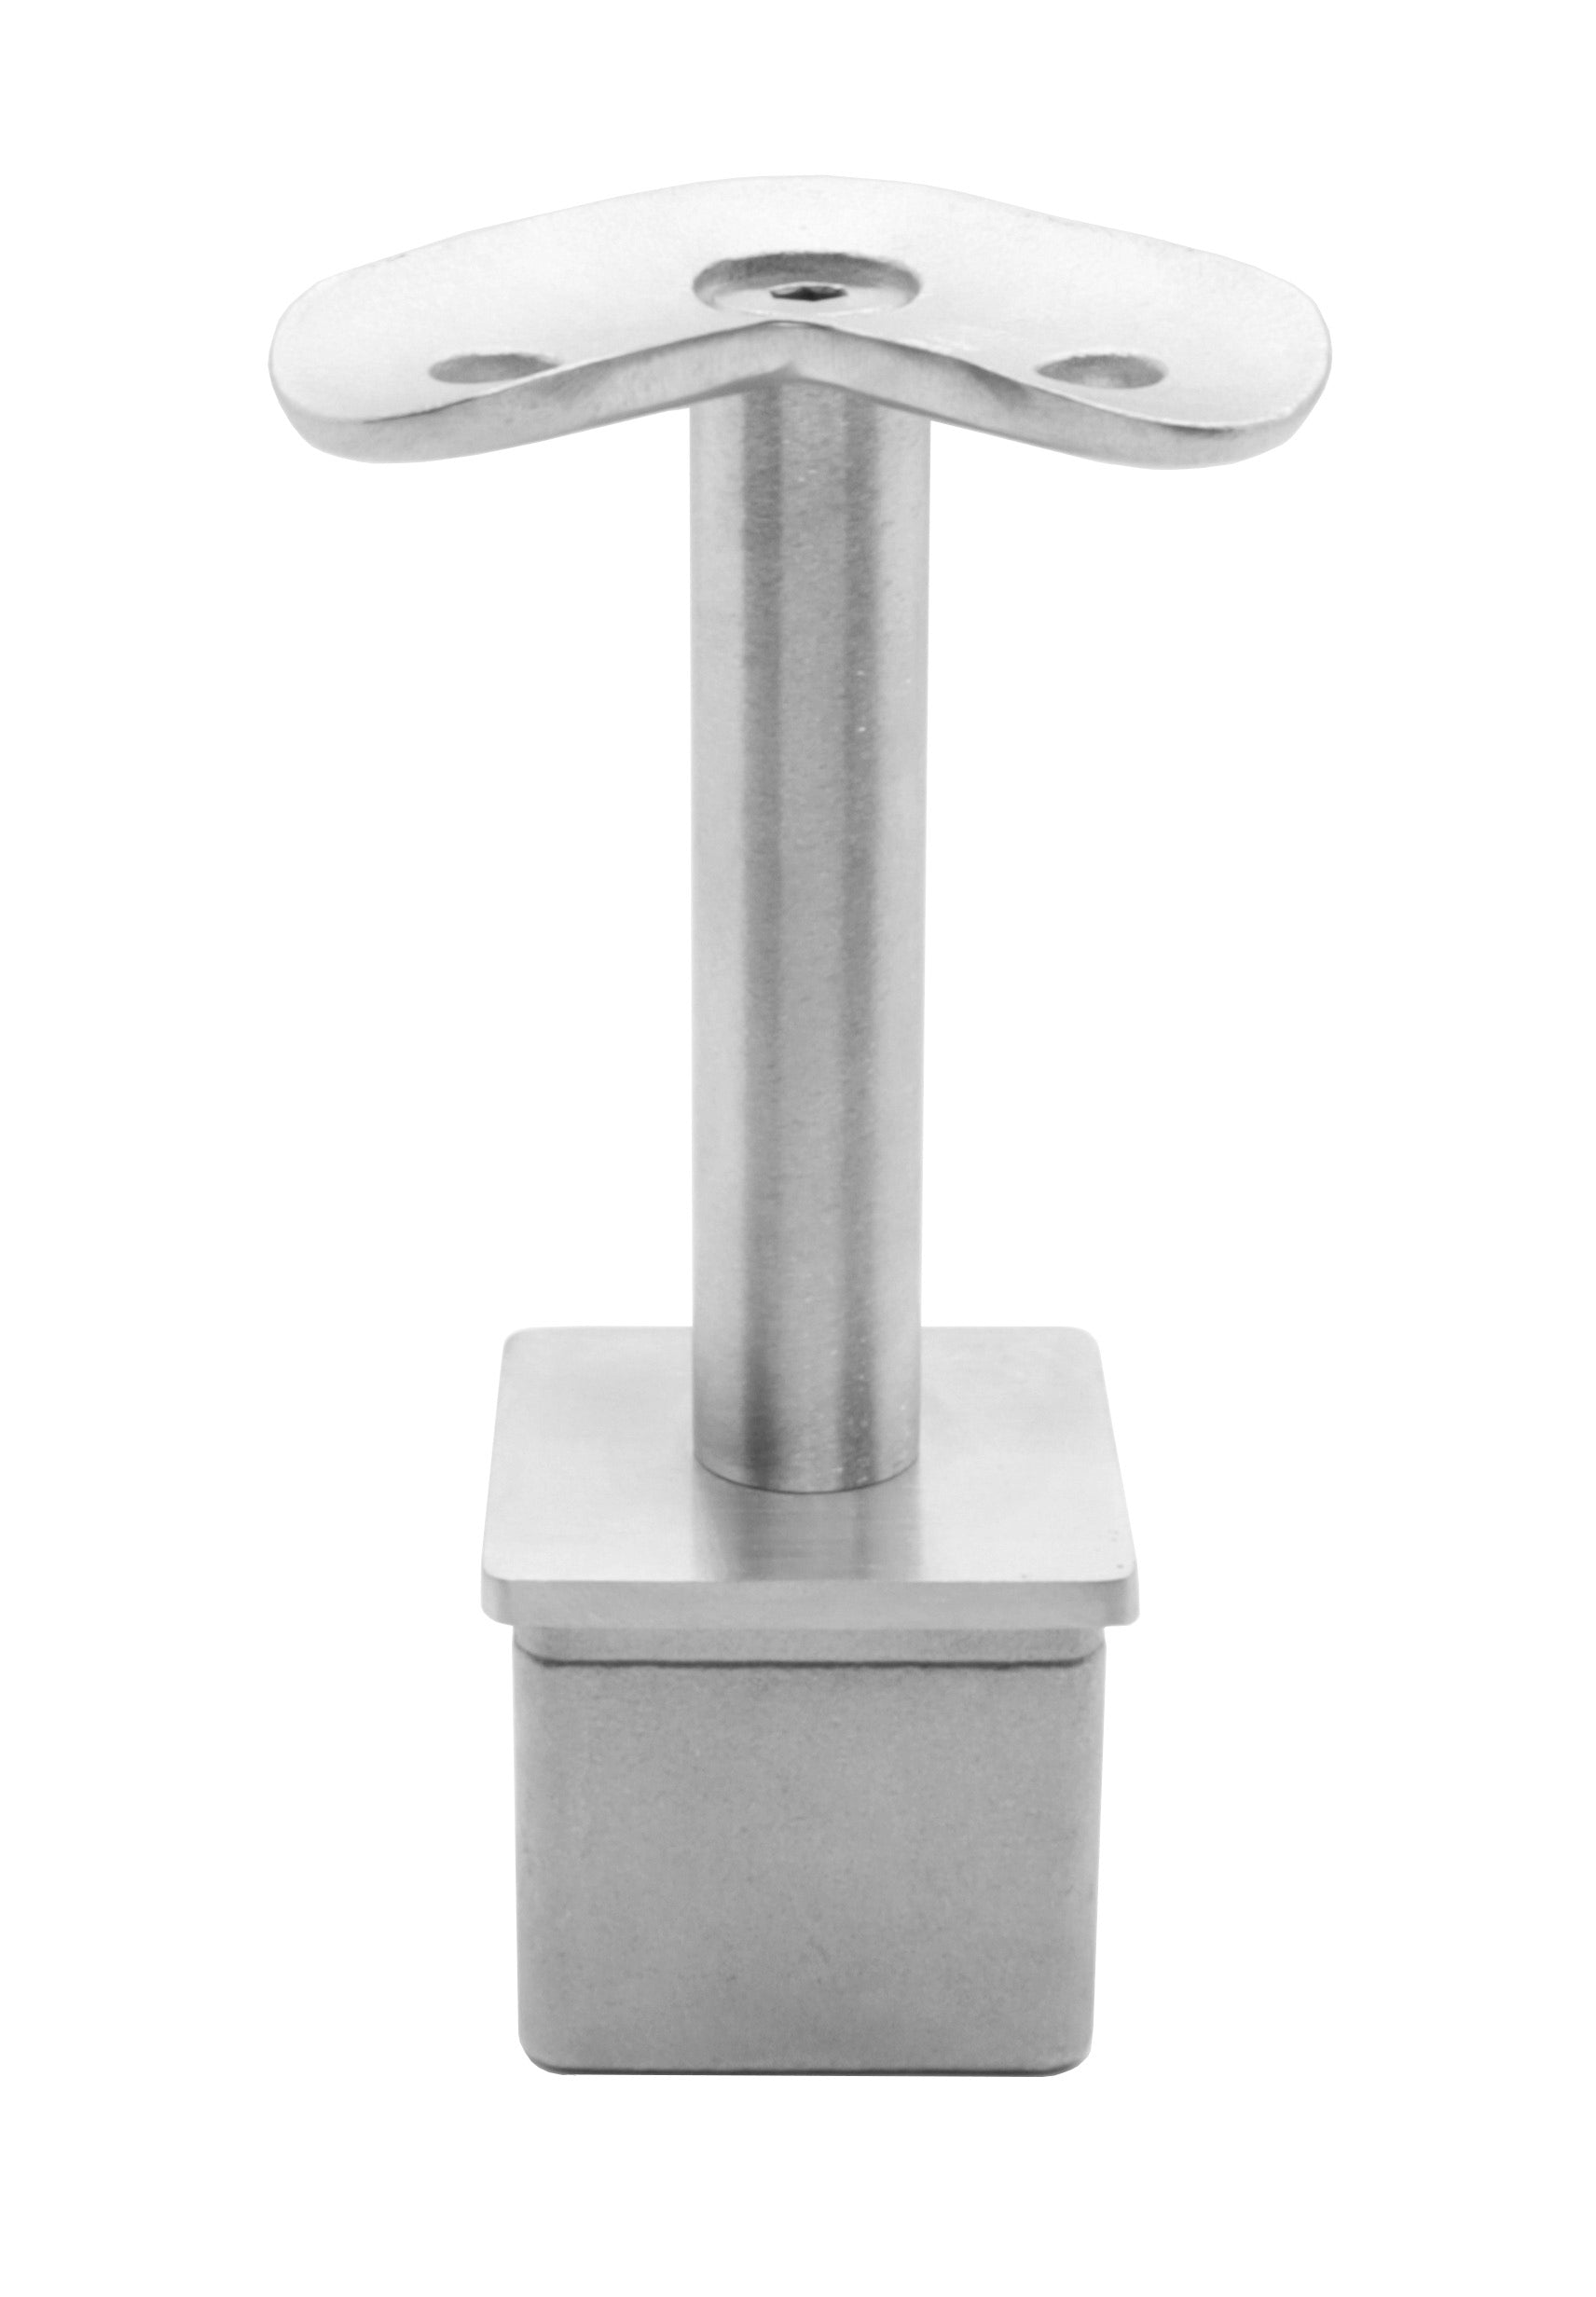 90 Degree Round Stem Post Handrail Bracket Stainless Steel for 2" Post Fitting (P0200-90-TOP-ROUND) - SHEMONICO